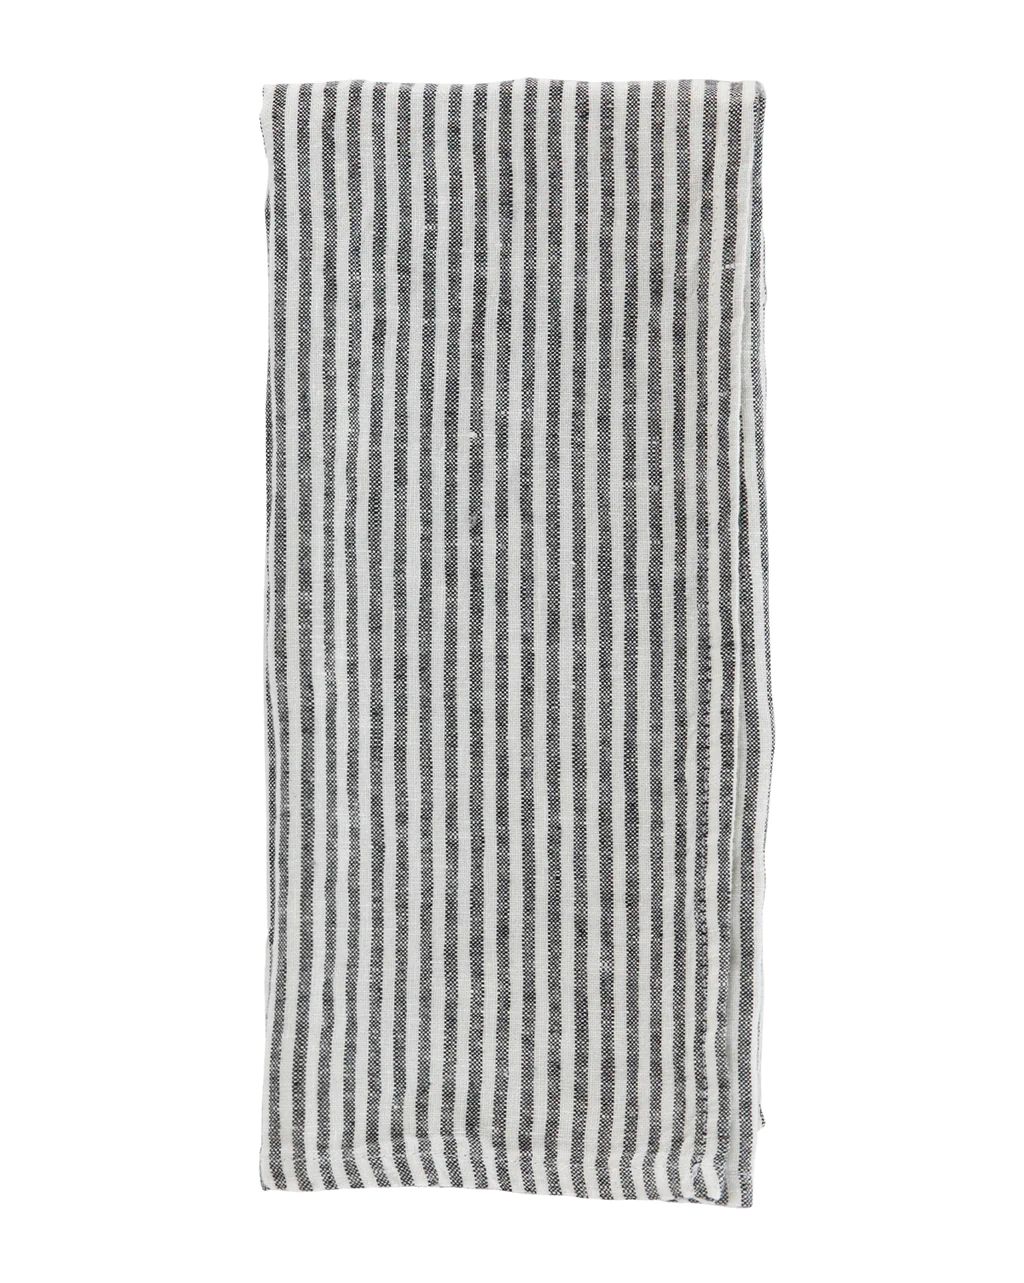 Thin Stripe Linen Hand Towel | McGee & Co.